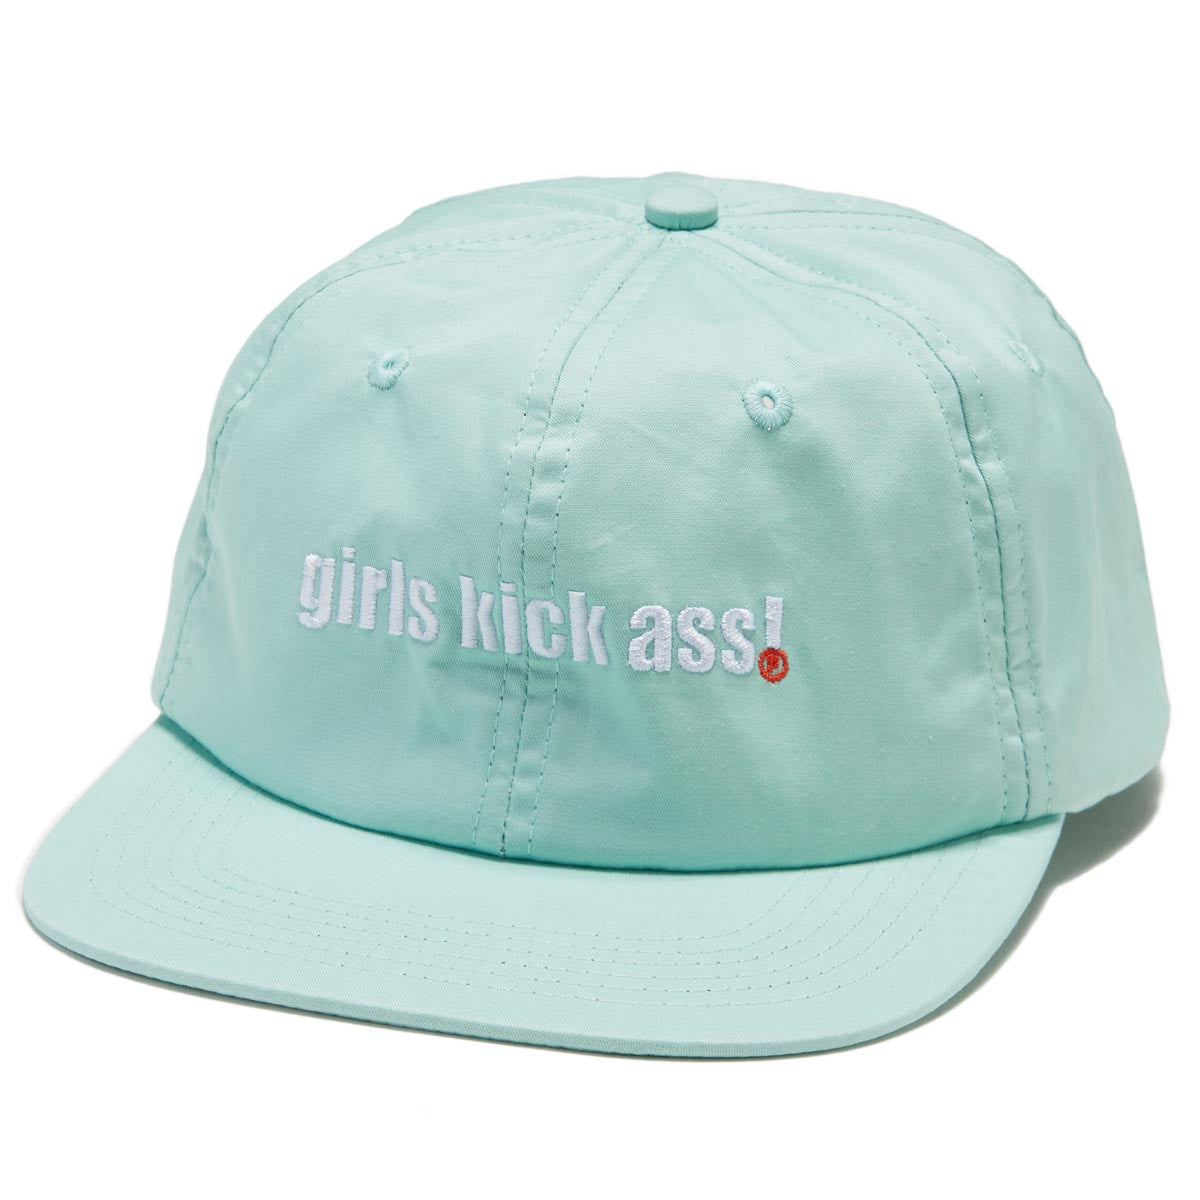 Foundation Girls Kick Ass Hat - Mint image 1